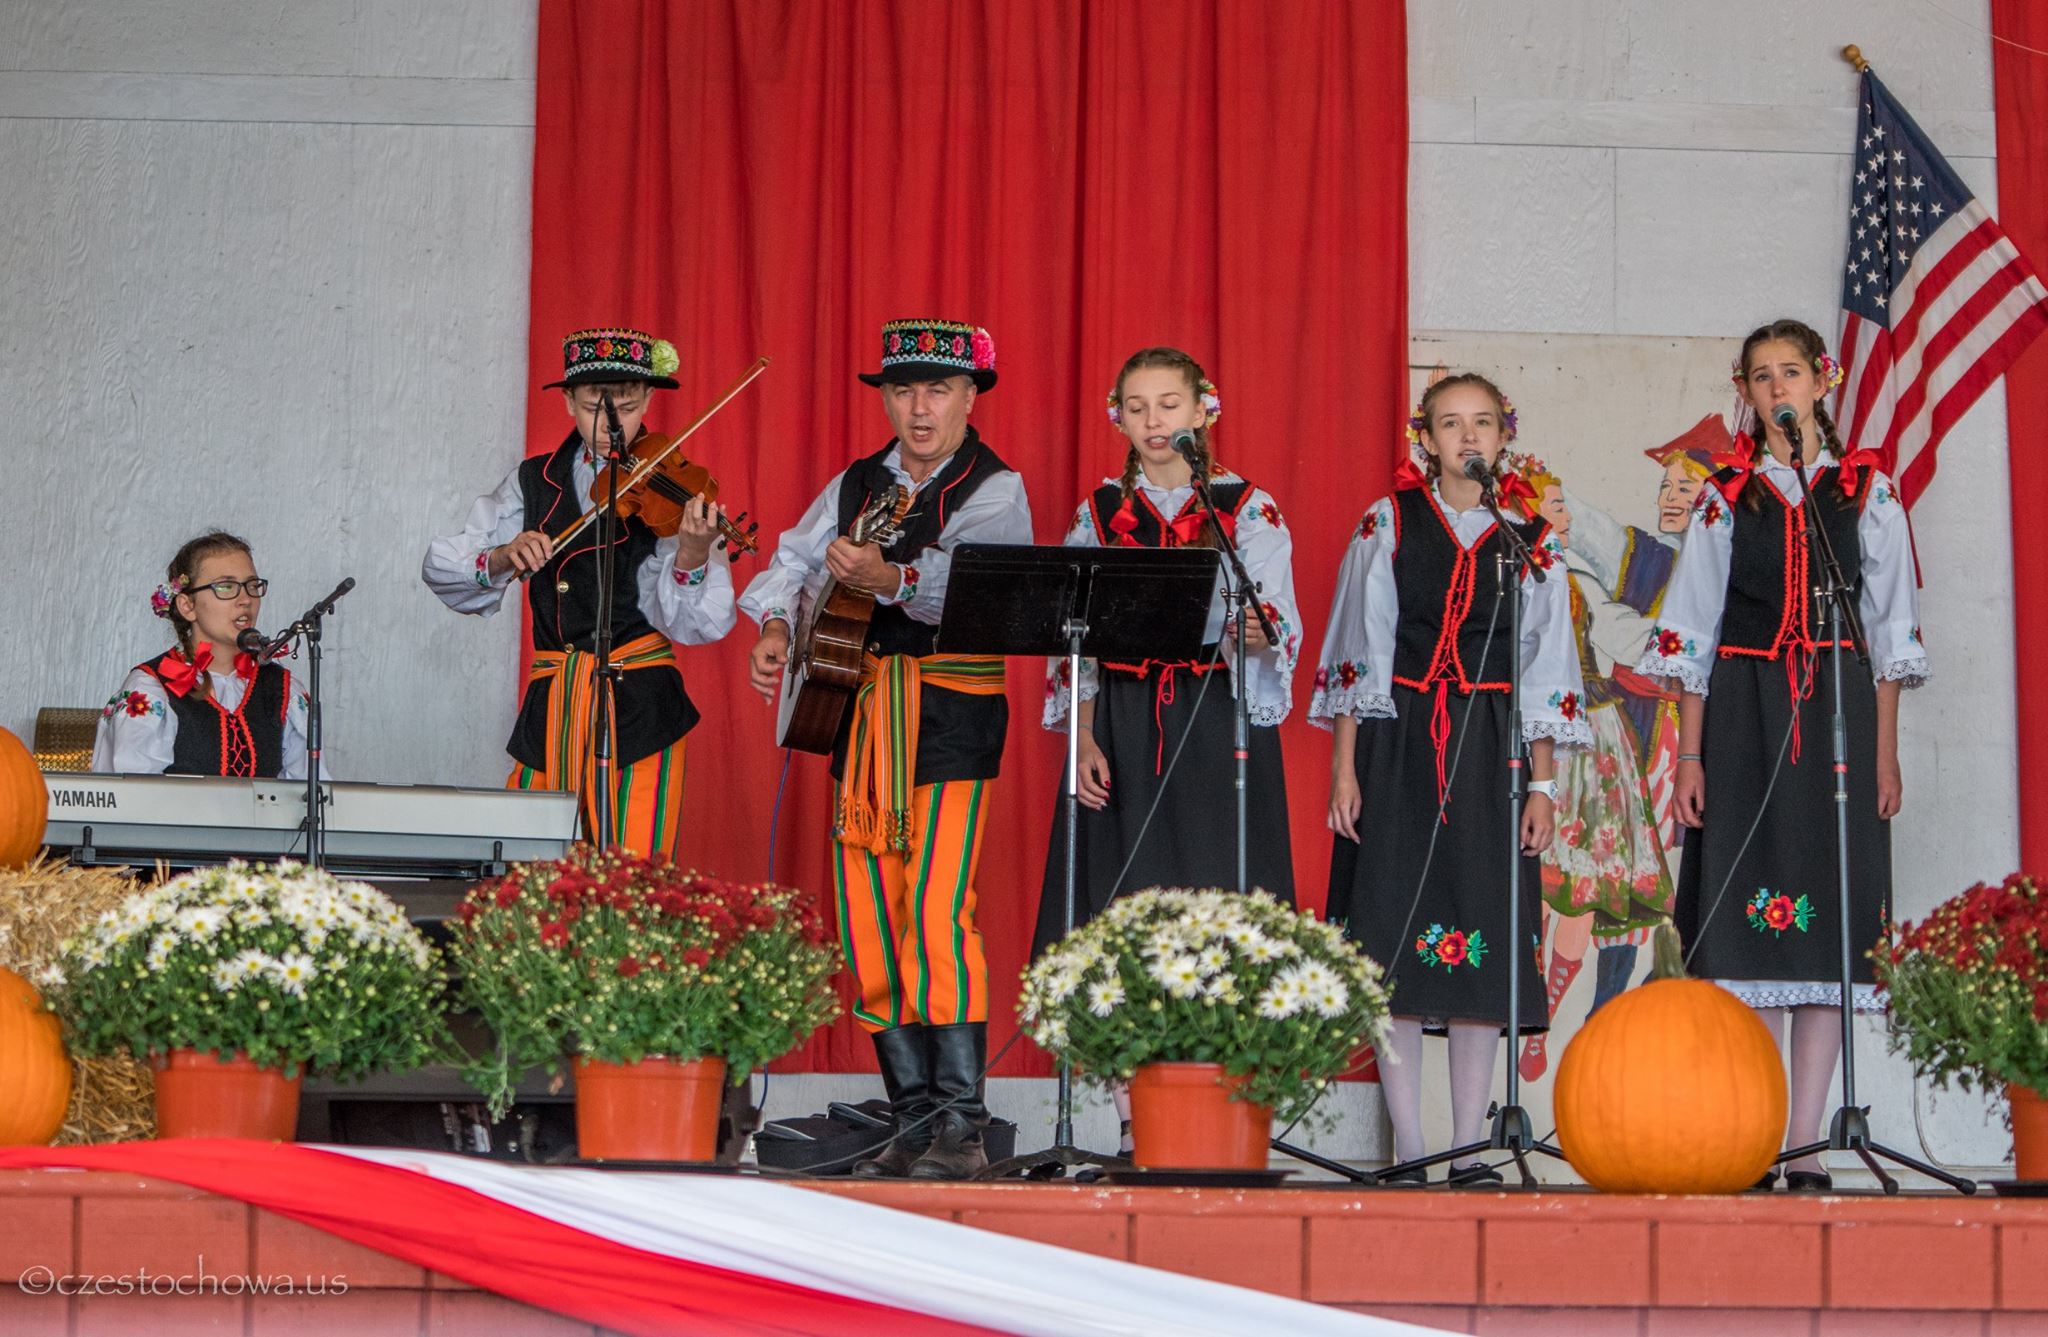 Our Program Polish American Festival & Country Fair